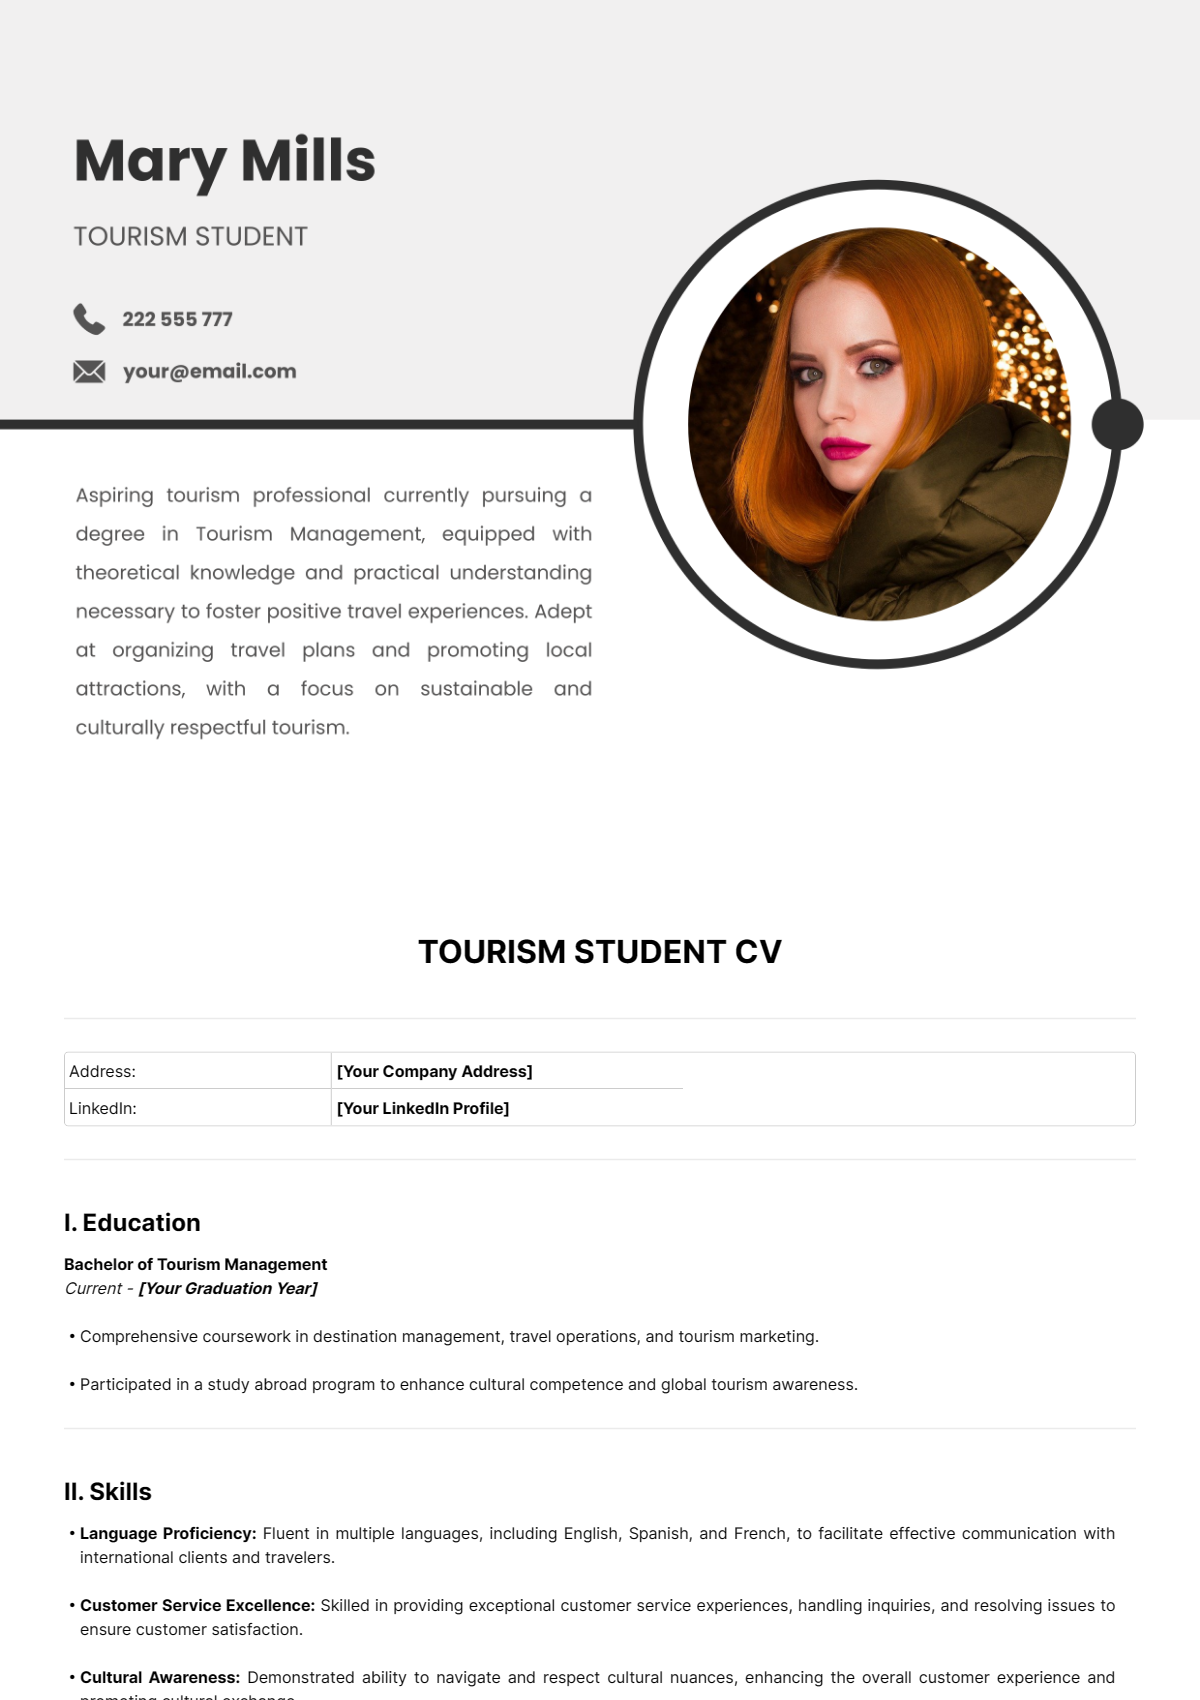 Tourism Student CV Template